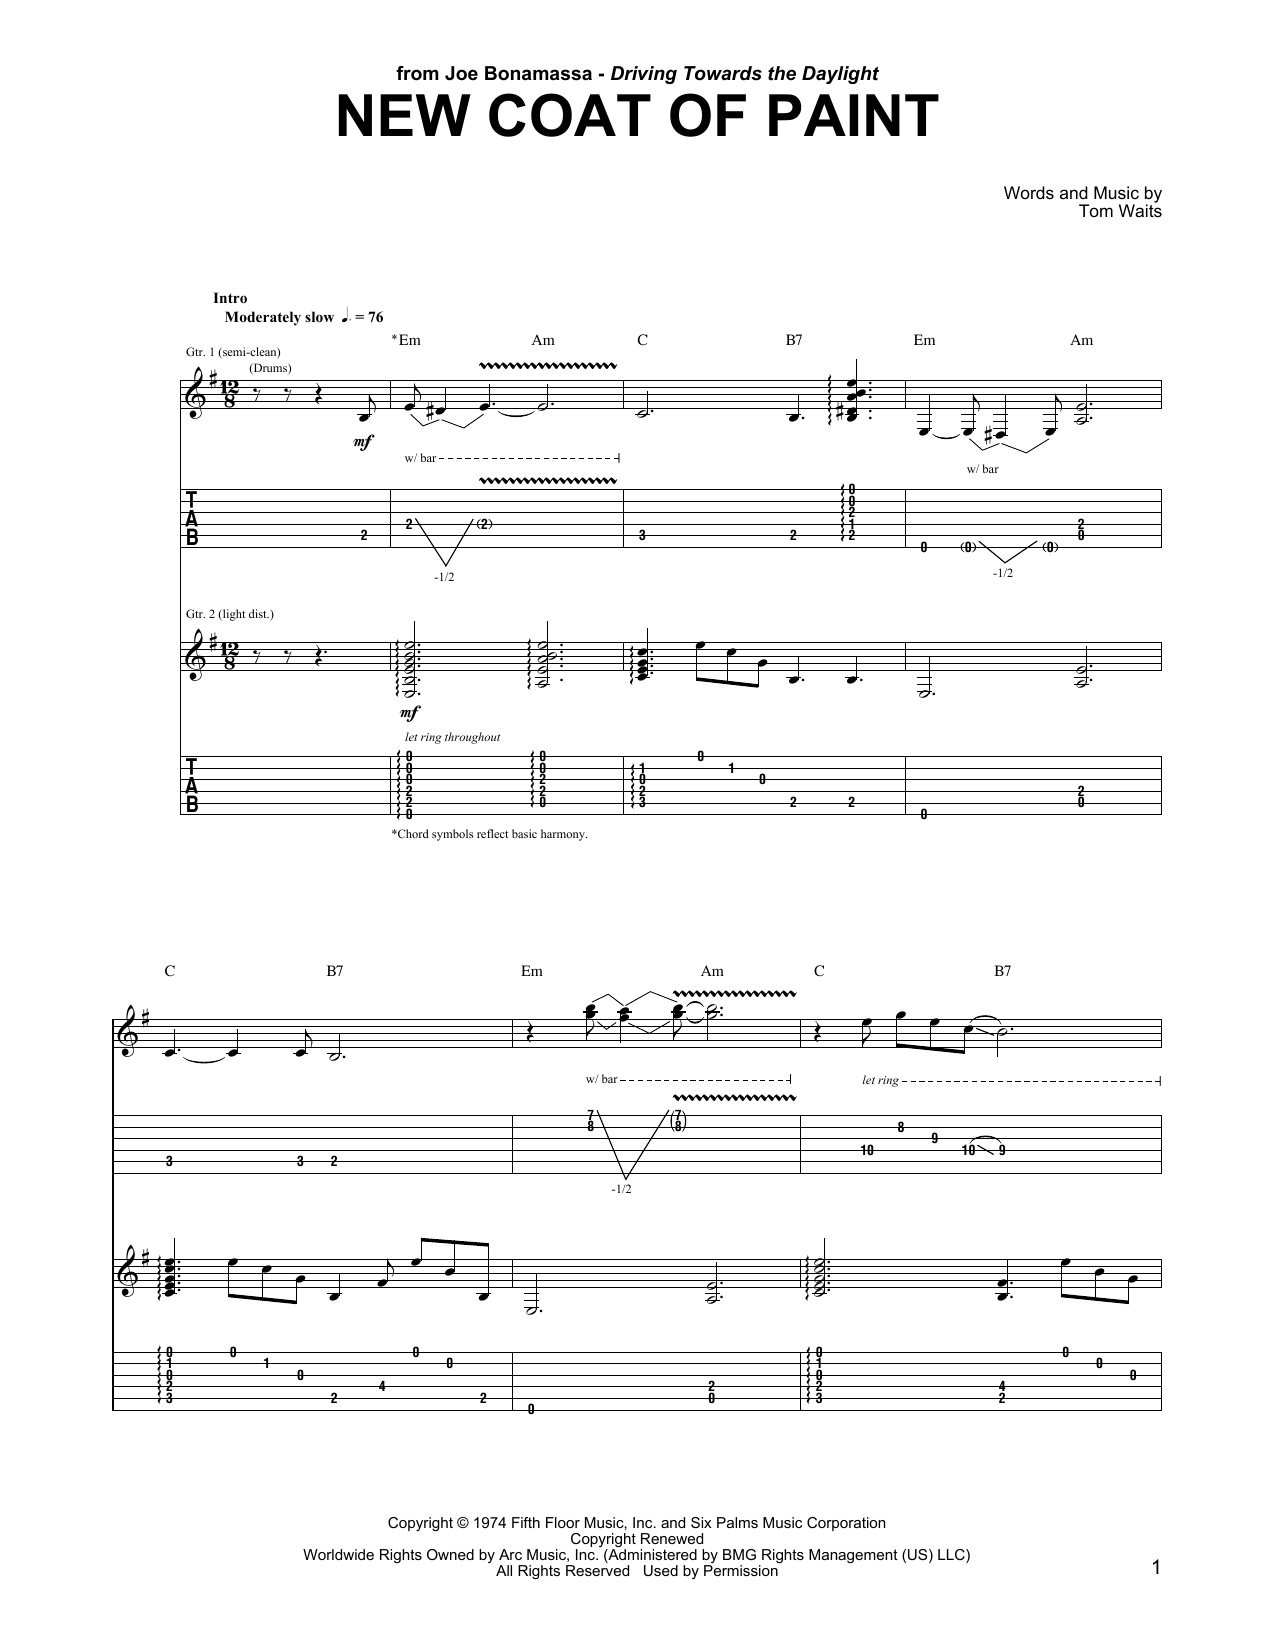 Download Joe Bonamassa New Coat Of Paint Sheet Music and learn how to play Guitar Tab PDF digital score in minutes